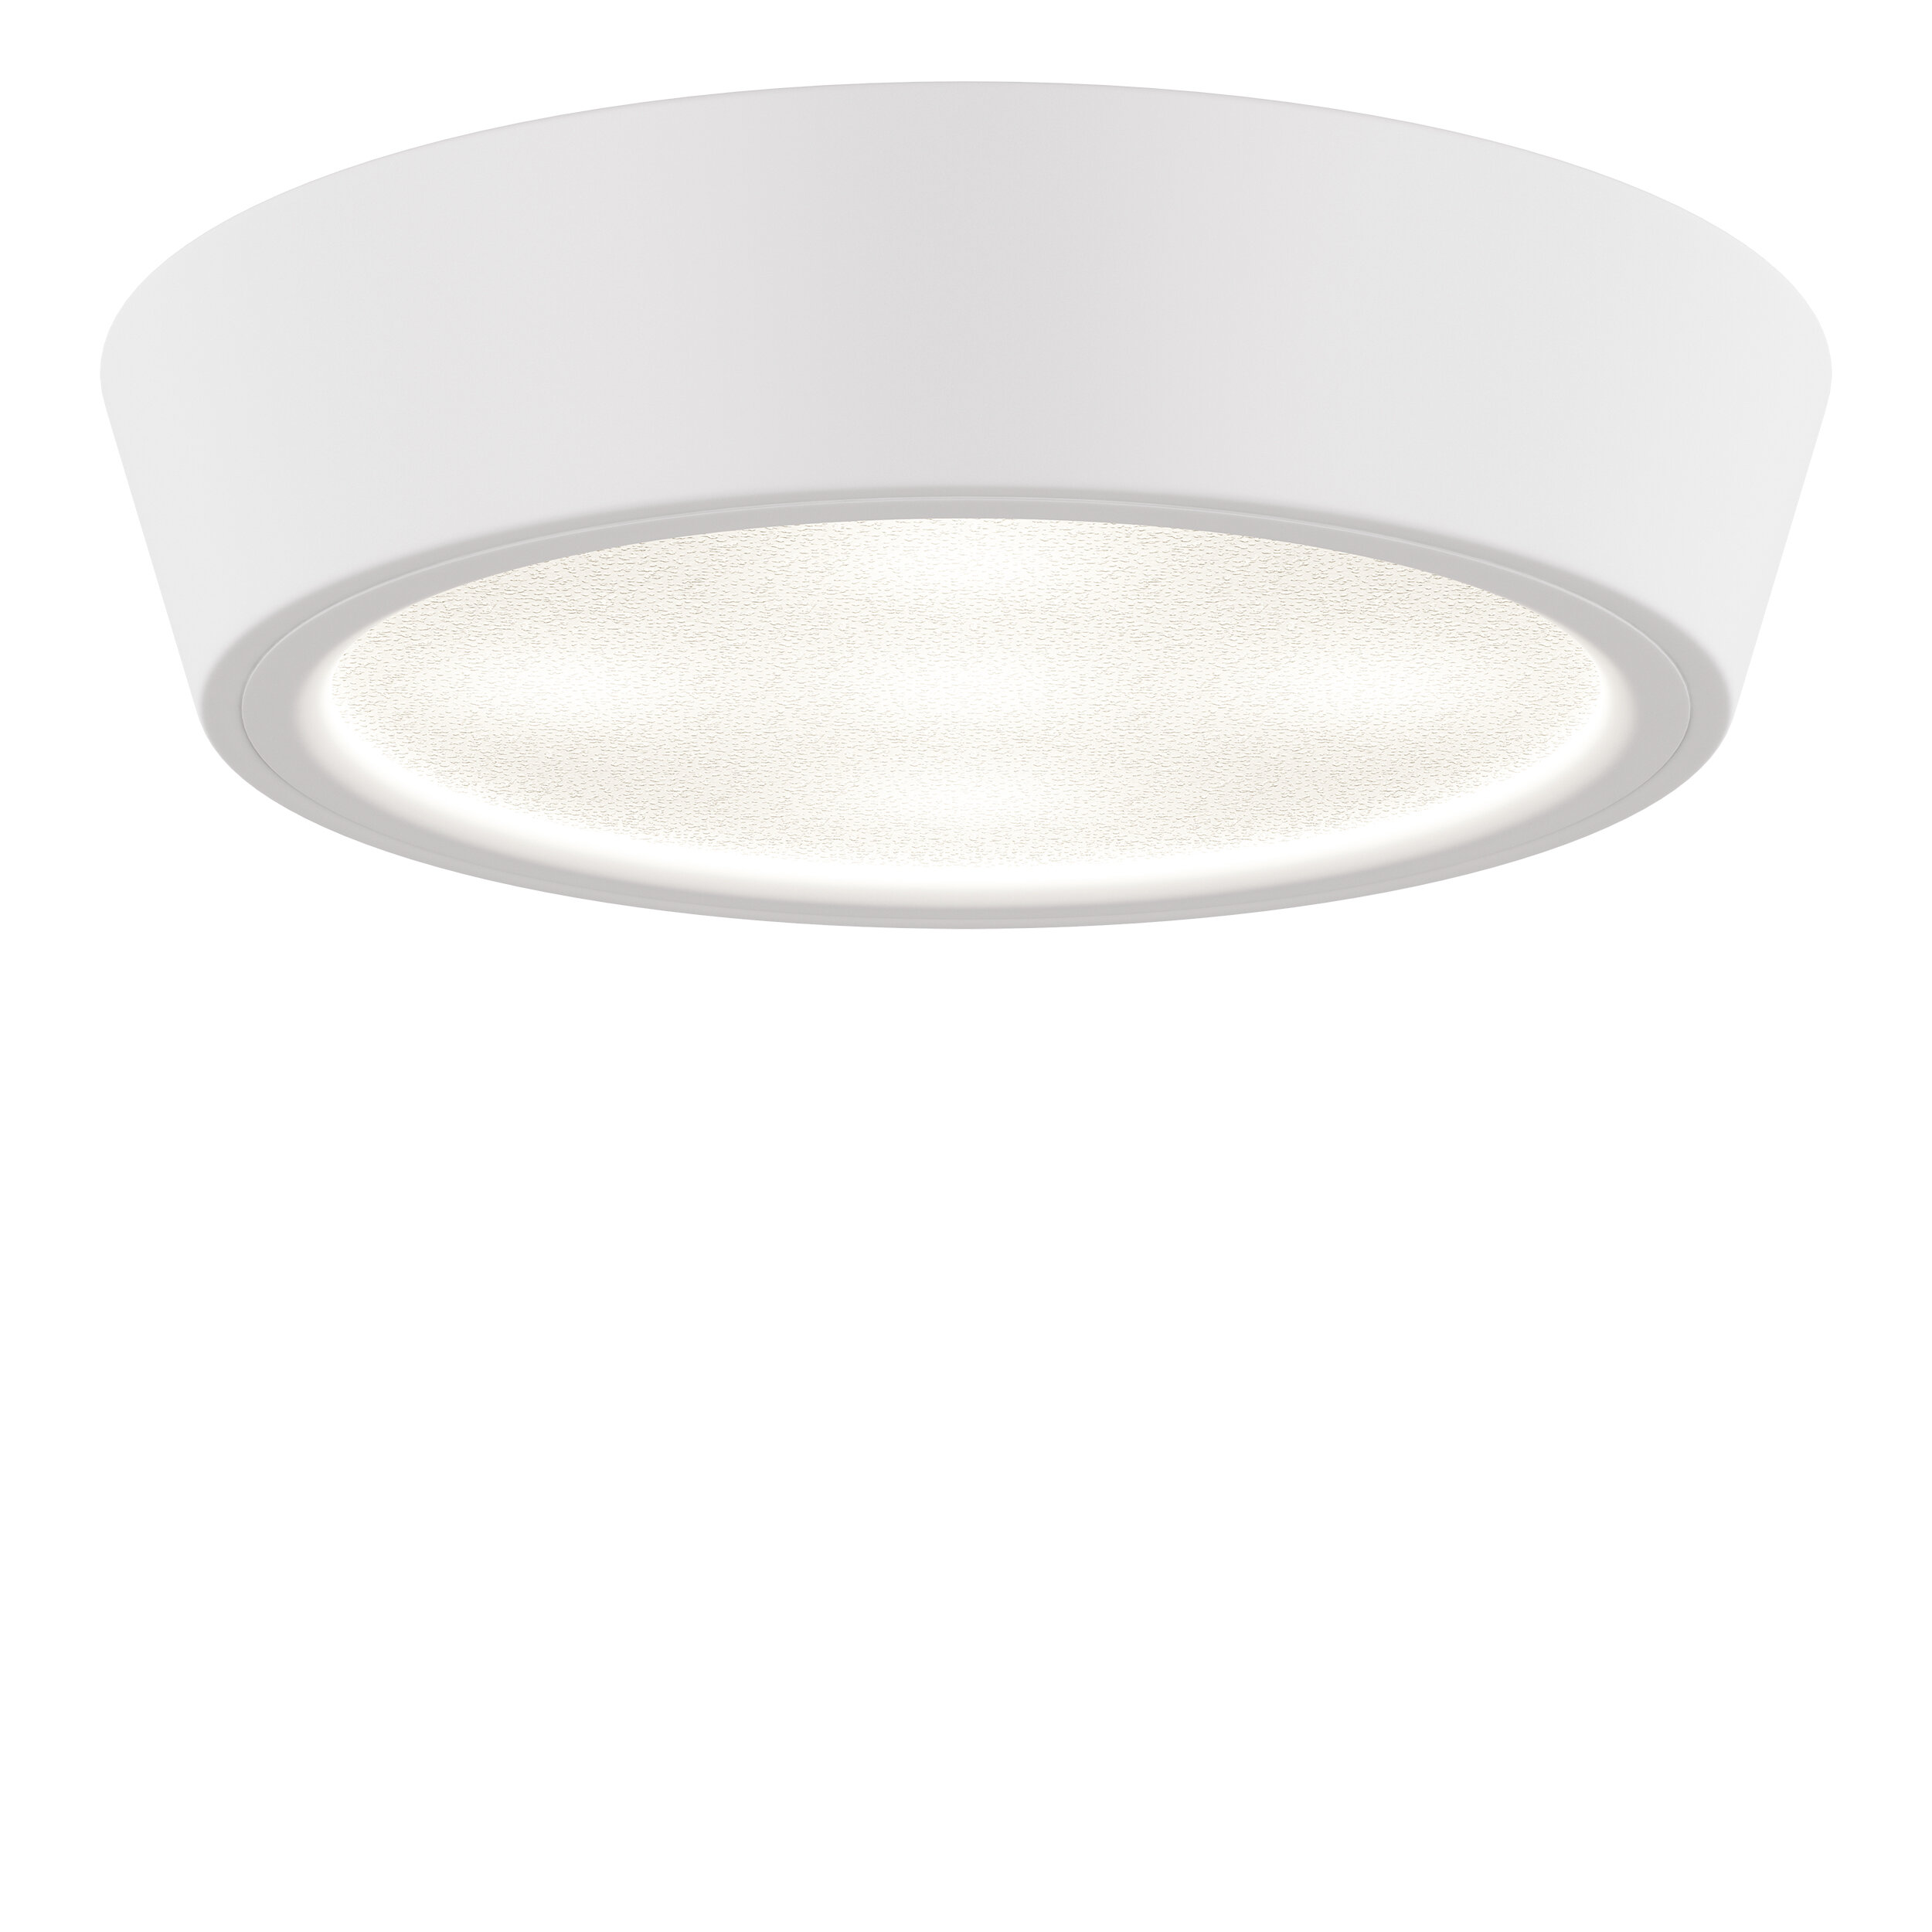 Светильник потолочный Lightstar Urbano 214902, Белый, LED